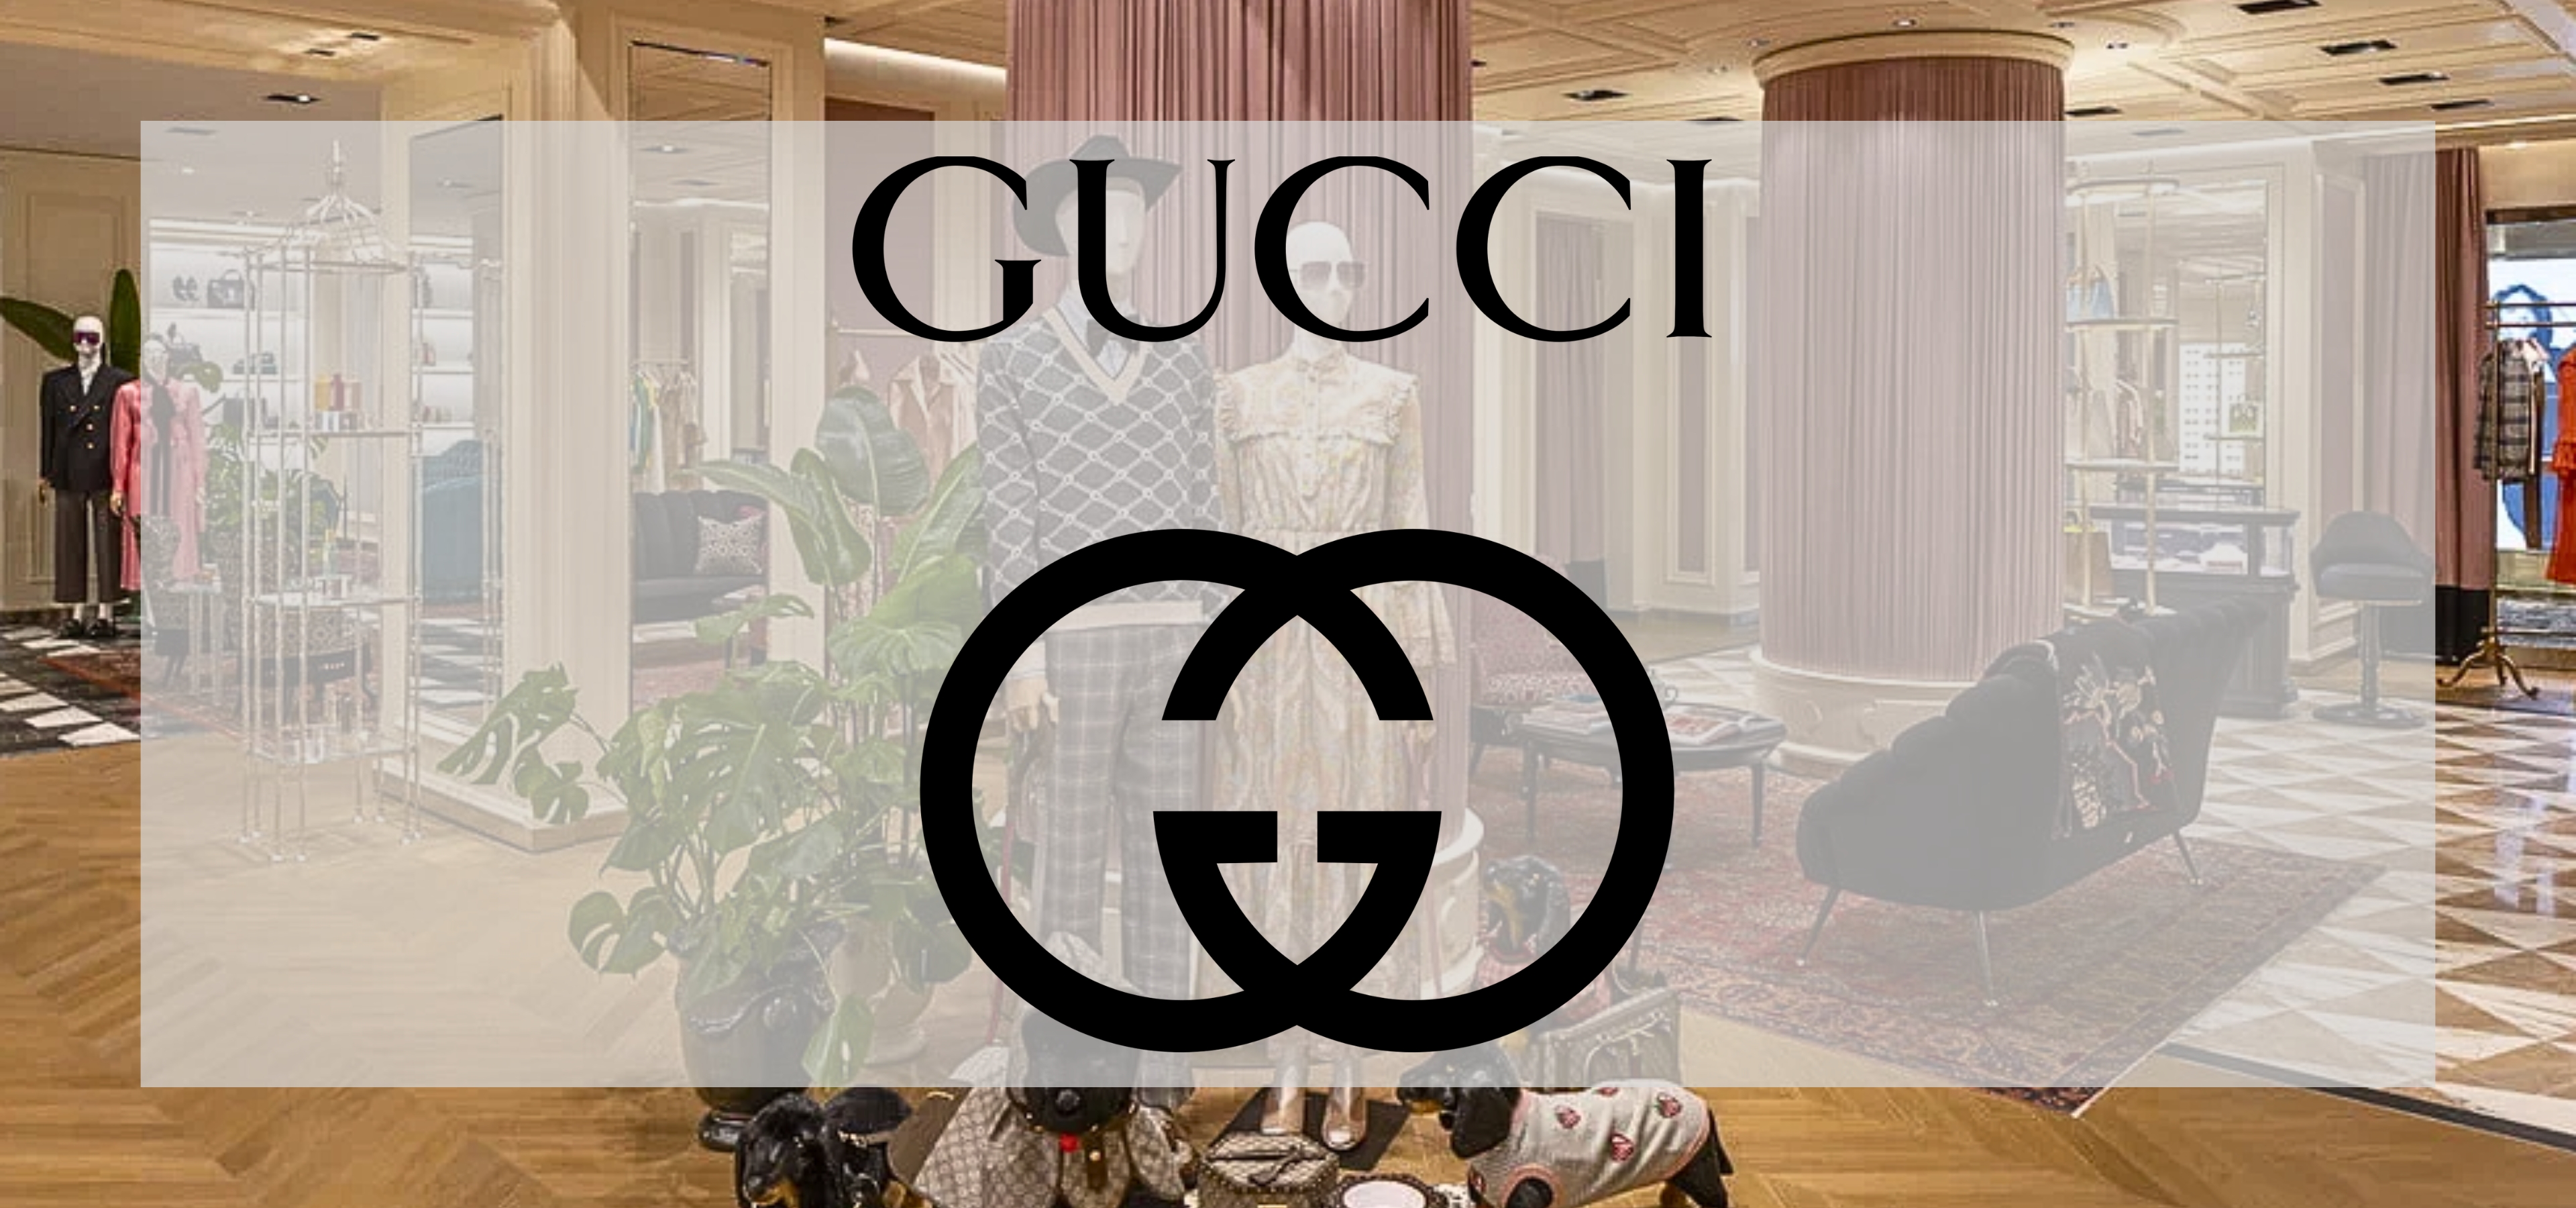 Gucci Project Image